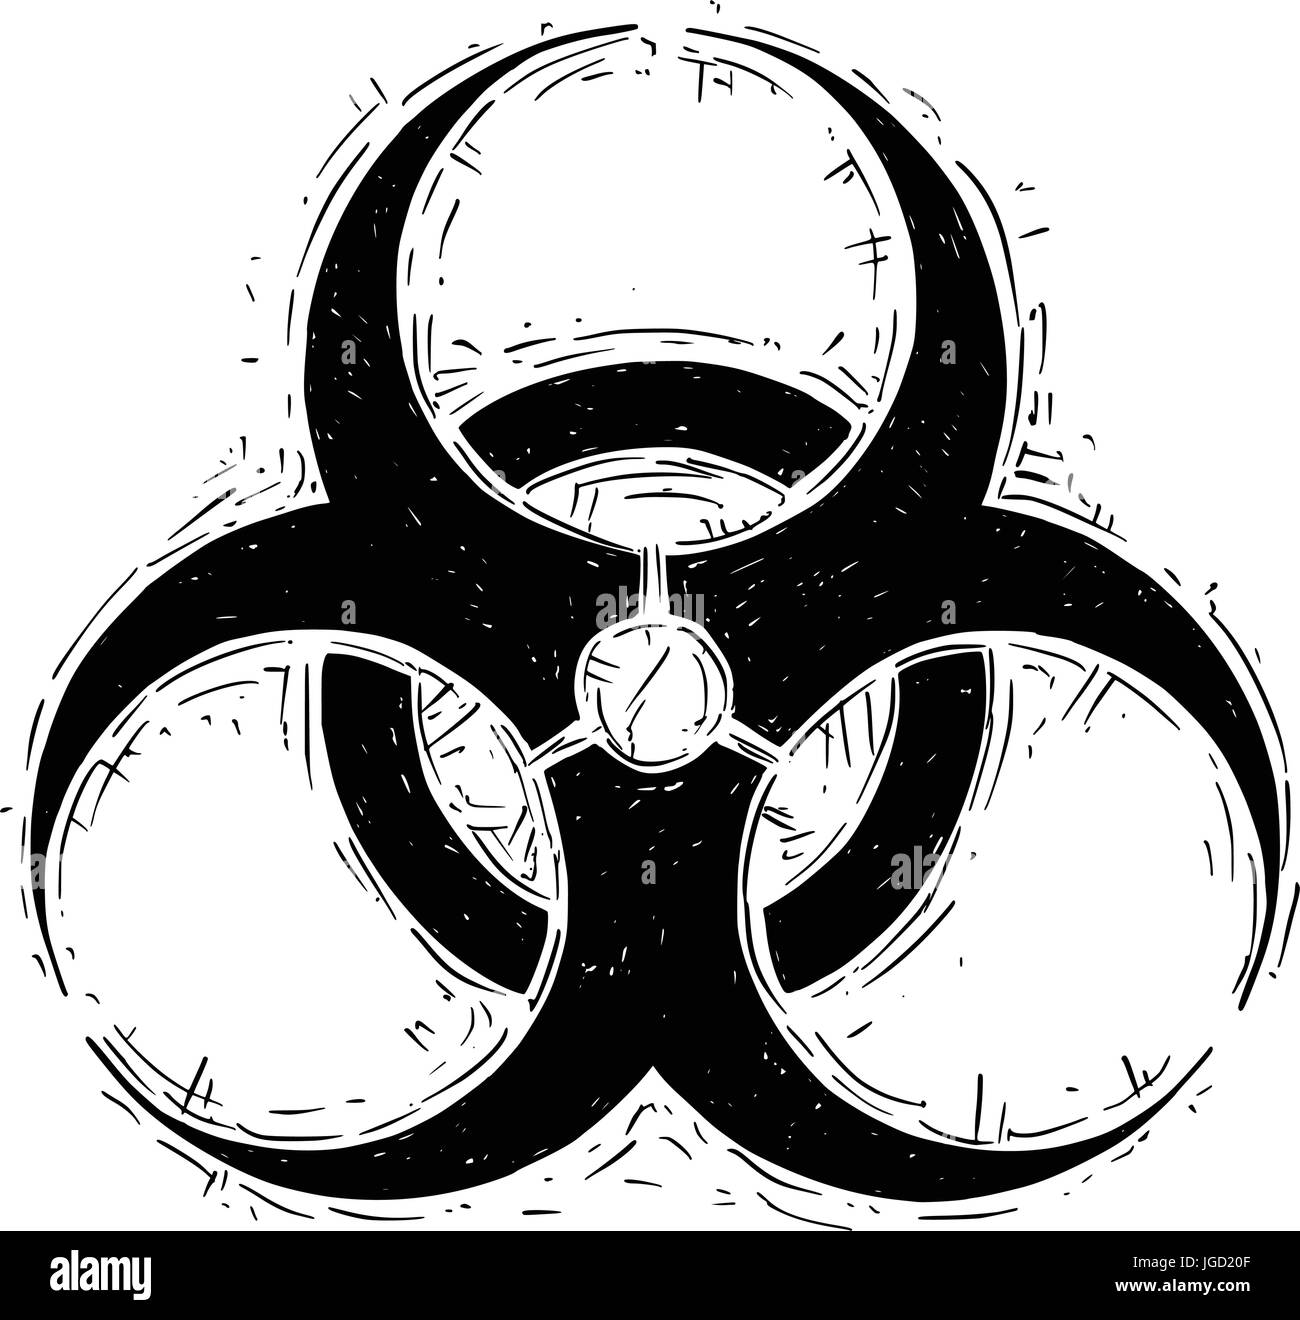 Dessin vectoriel illustration du symbole biohazard Illustration de Vecteur